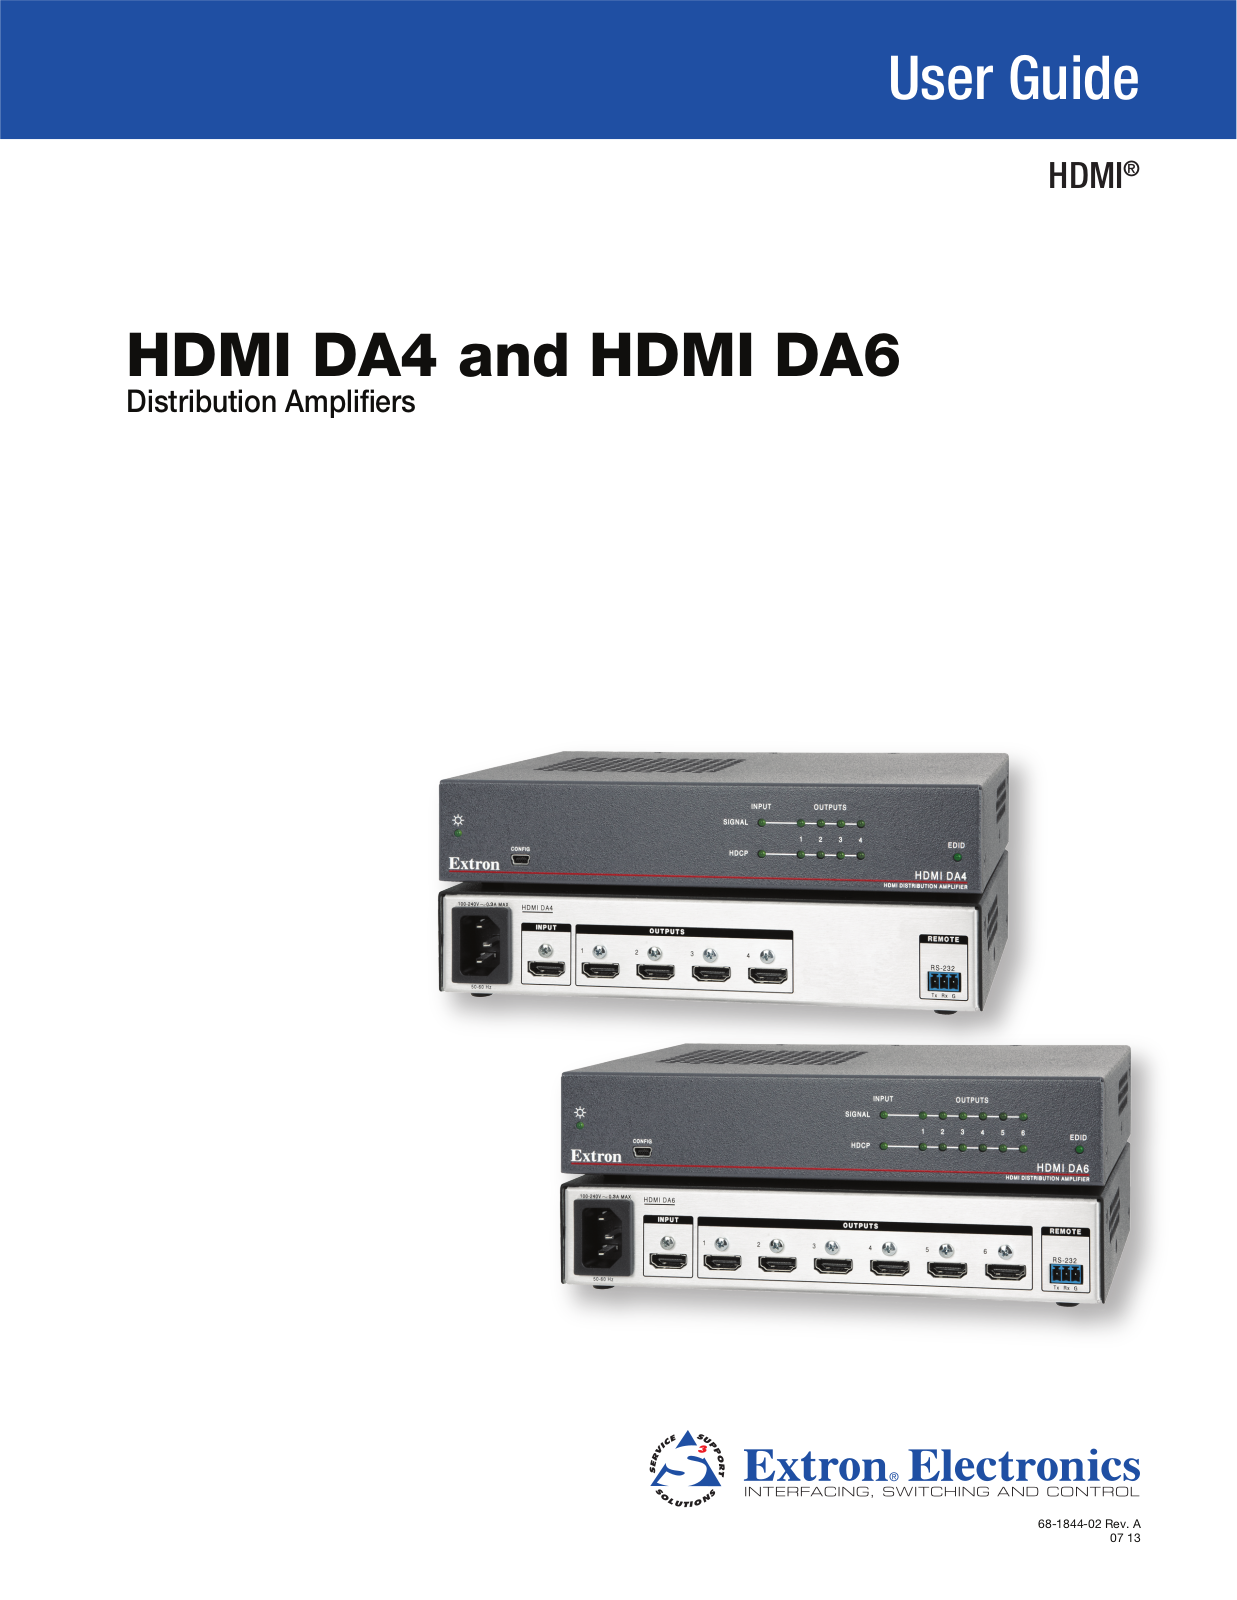 Extron Electronics HDMI DA6 User Manual